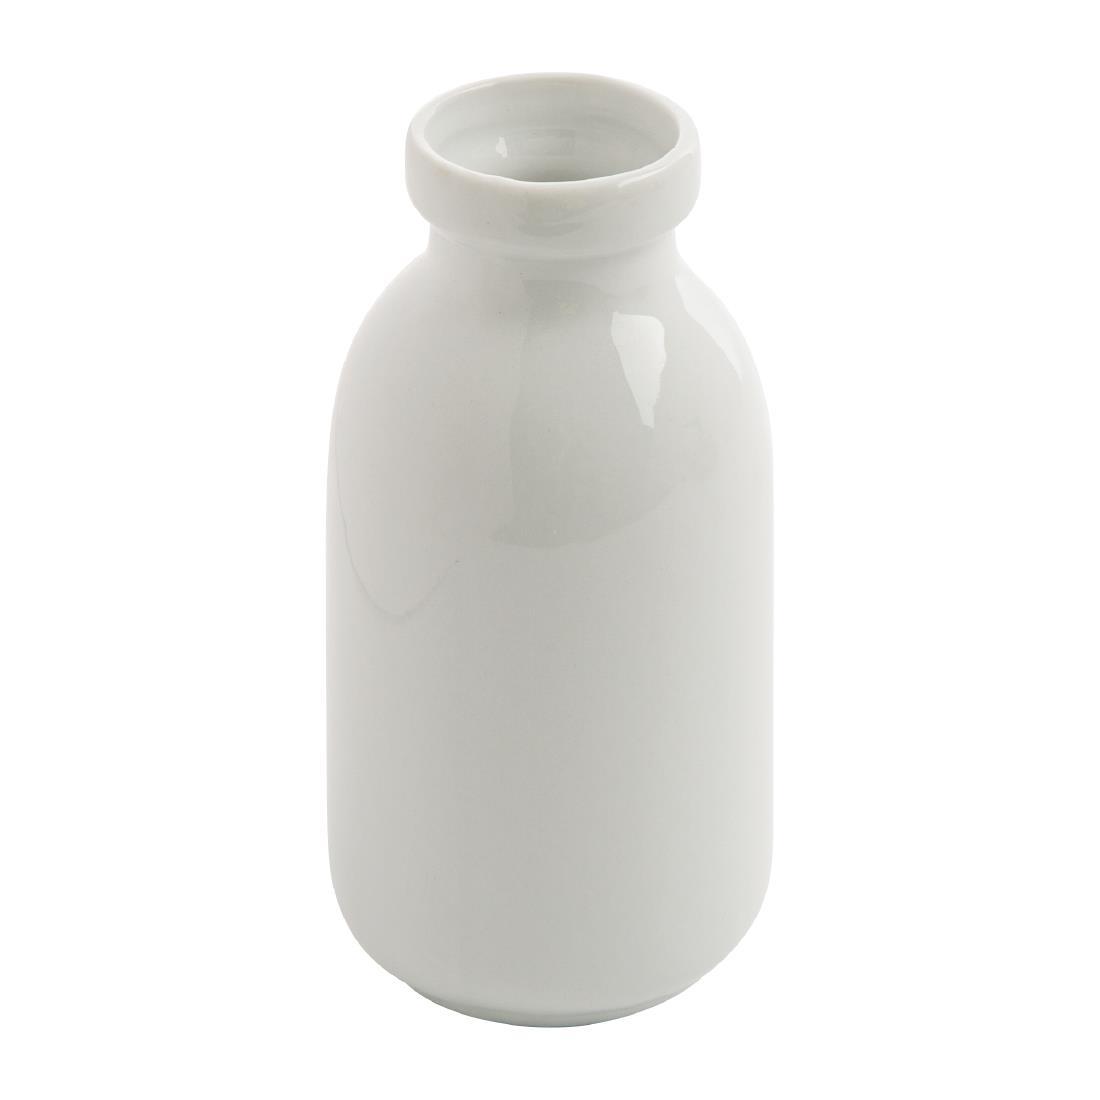 Olympia White Mini Milk Bottle 145ml (Pack of 12) - GM368  - 3